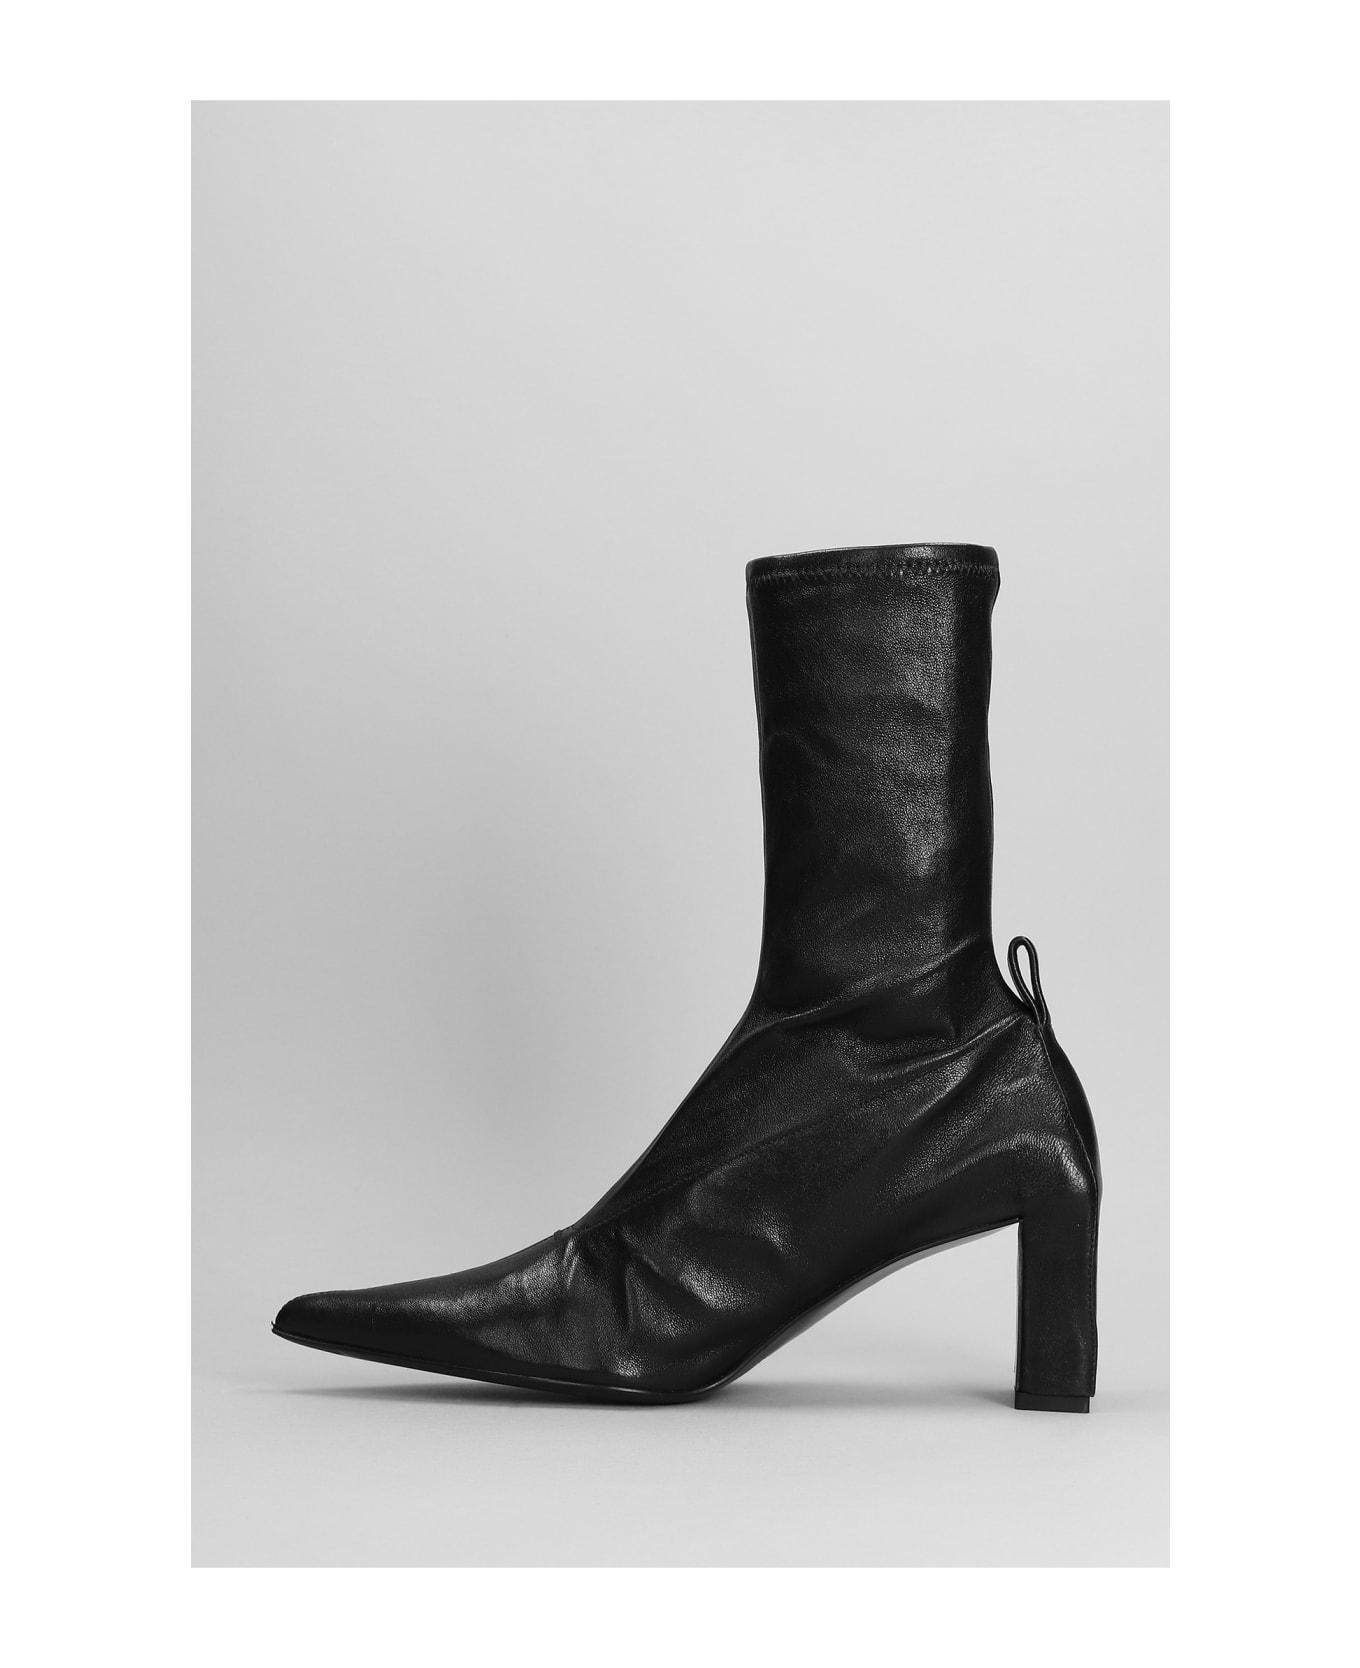 Jil Sander Low Heels Ankle Boots In Black Leather - Black